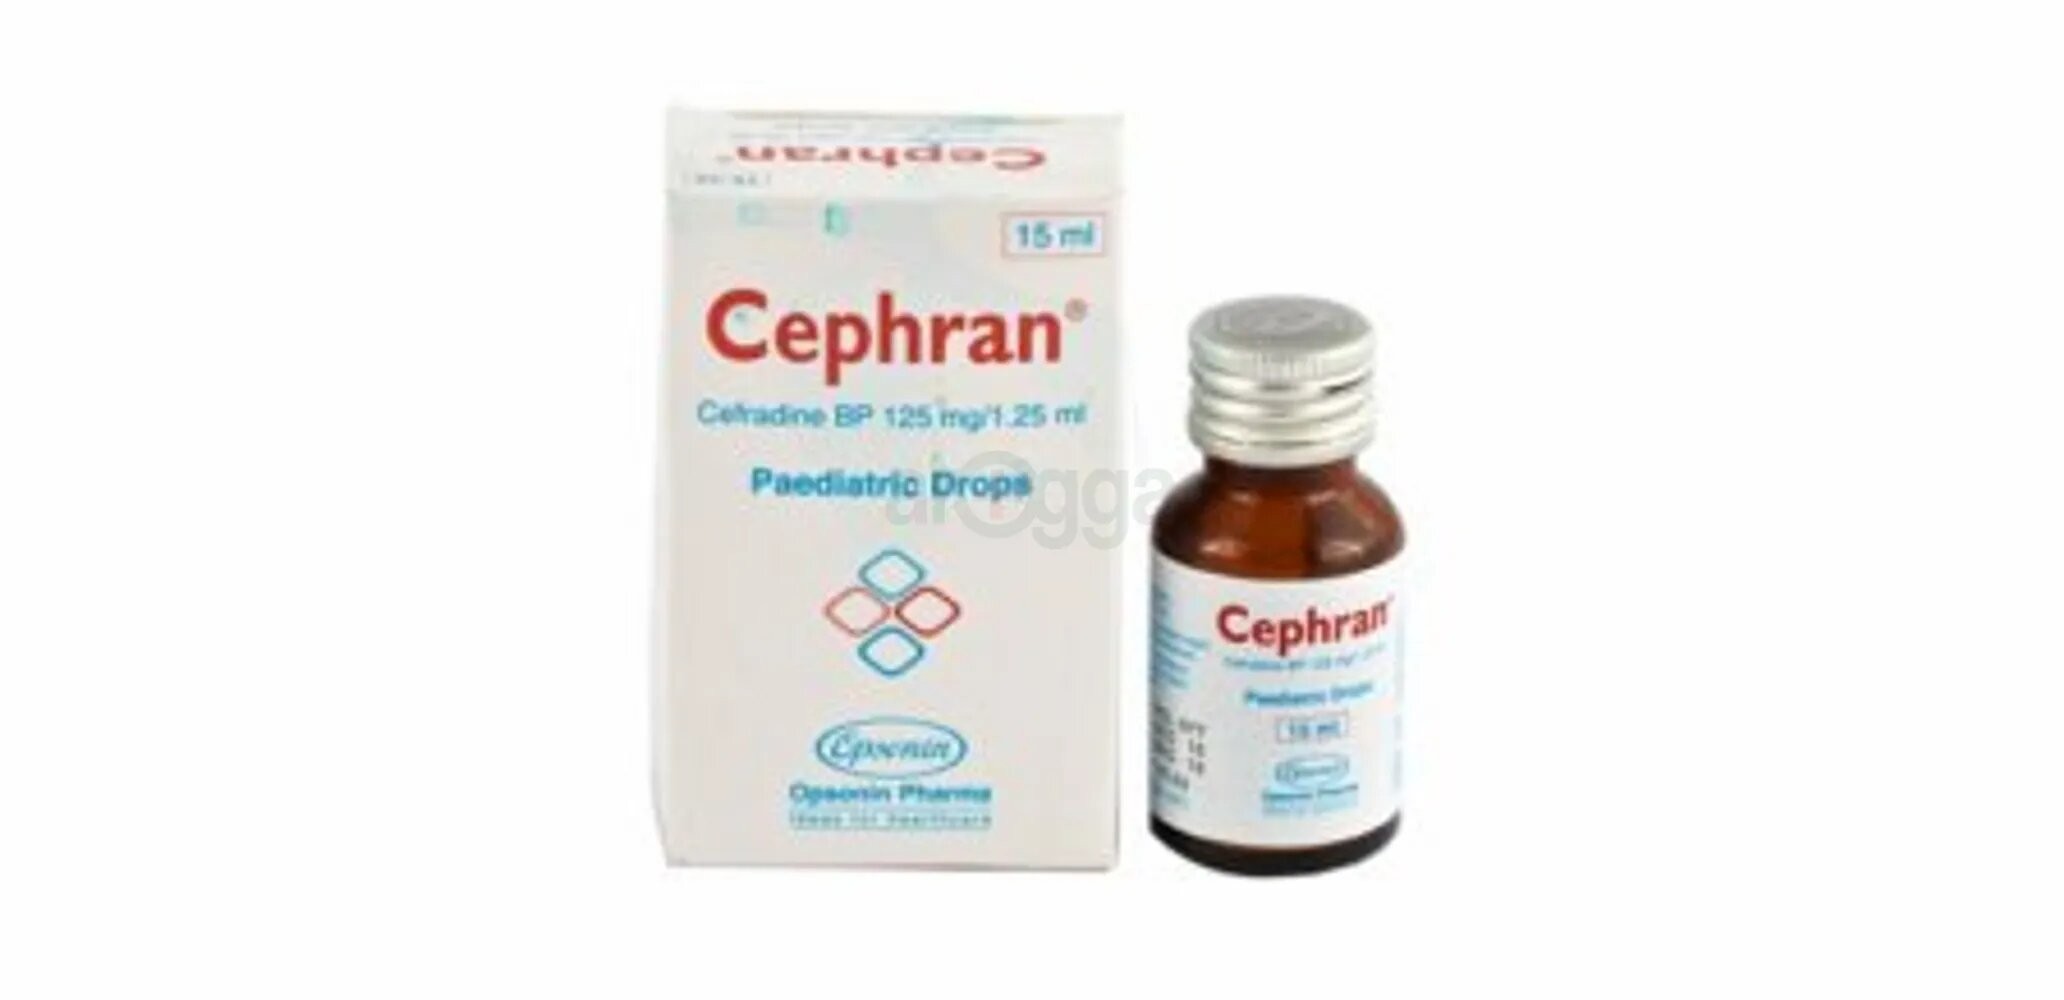 Cephran(125 mg/1.25 ml)